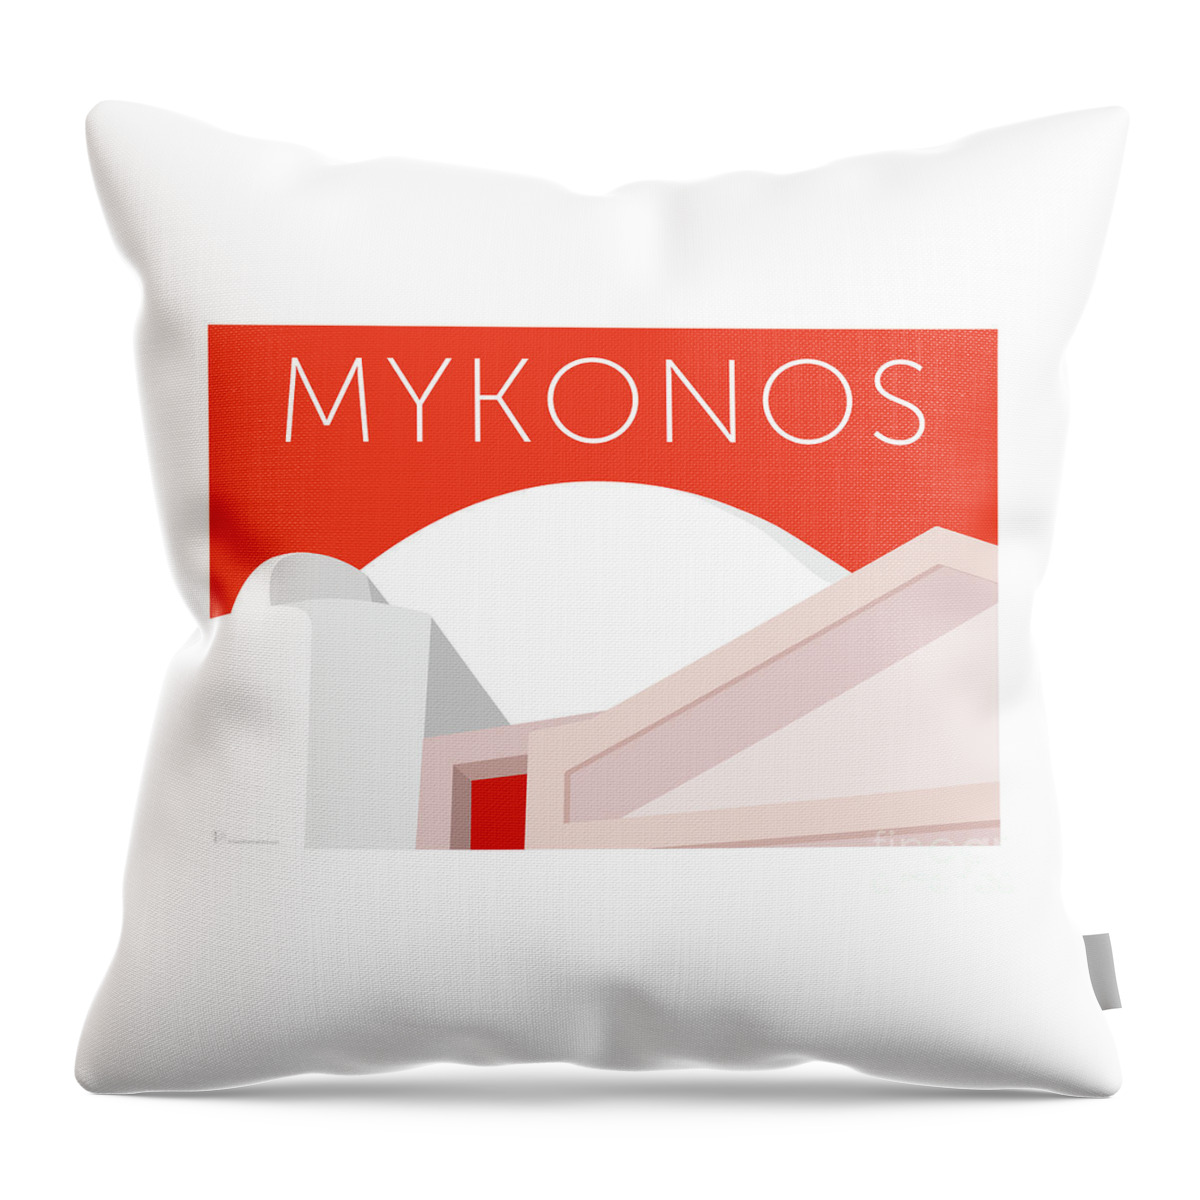 Mykonos Throw Pillow featuring the digital art MYKONOS Walls - Orange by Sam Brennan